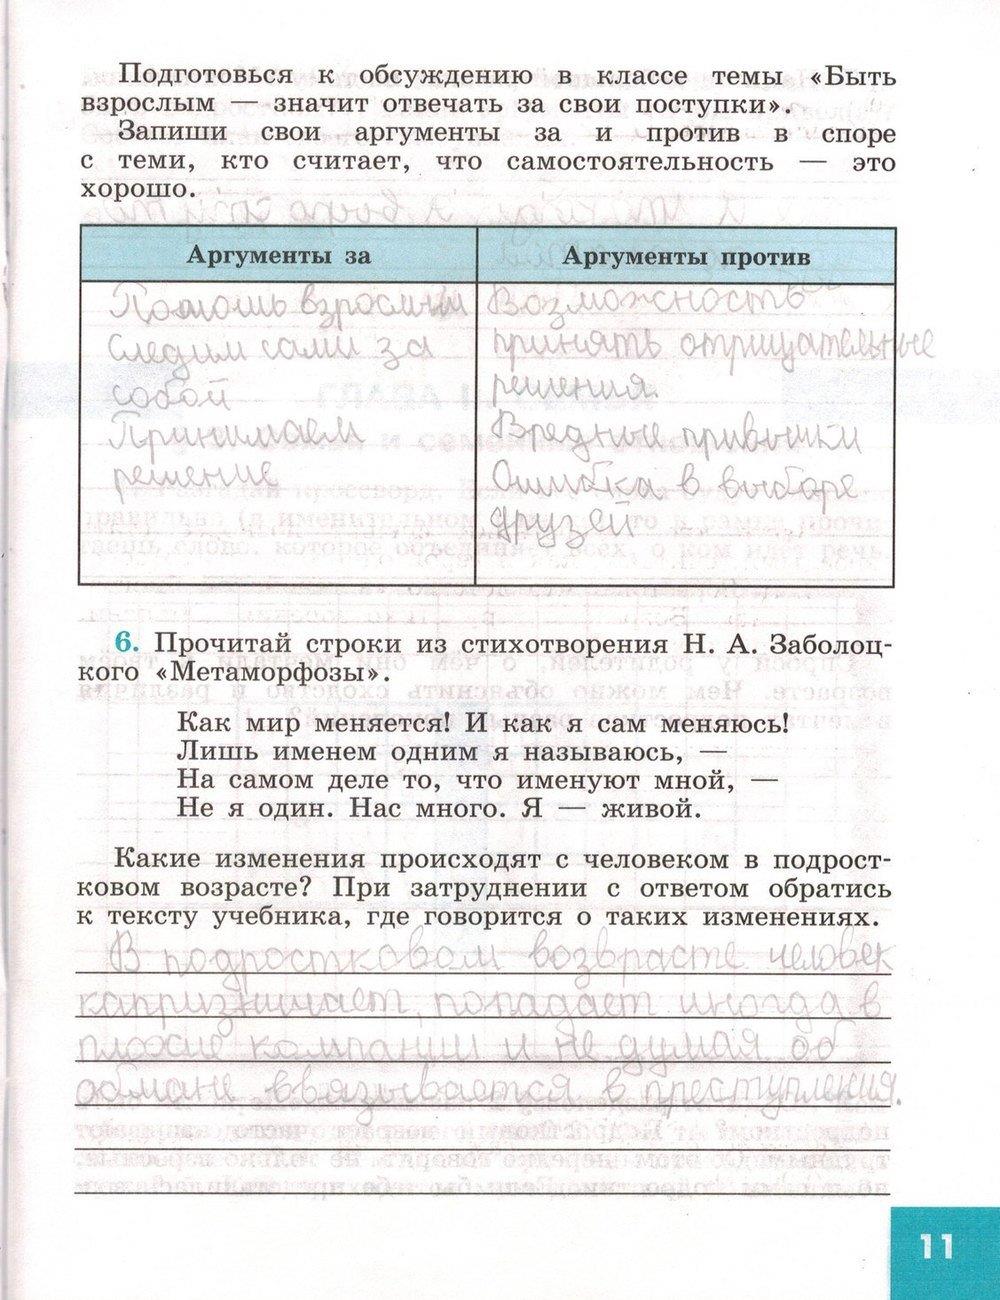 гдз 5 класс рабочая тетрадь страница 11 обществознание Иванова, Хотеенкова